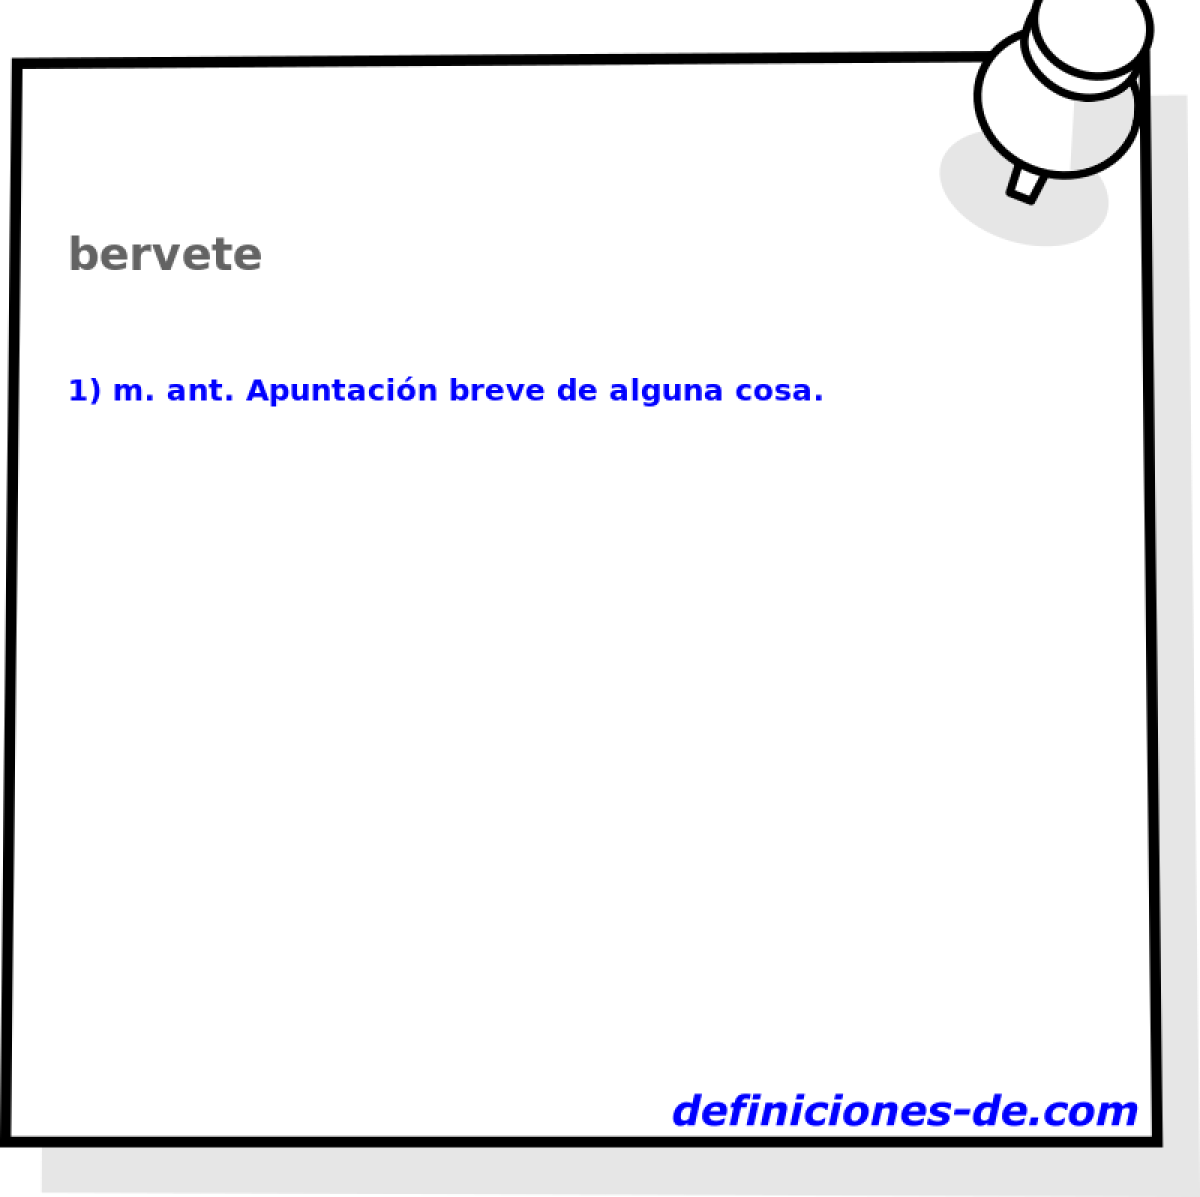 bervete 